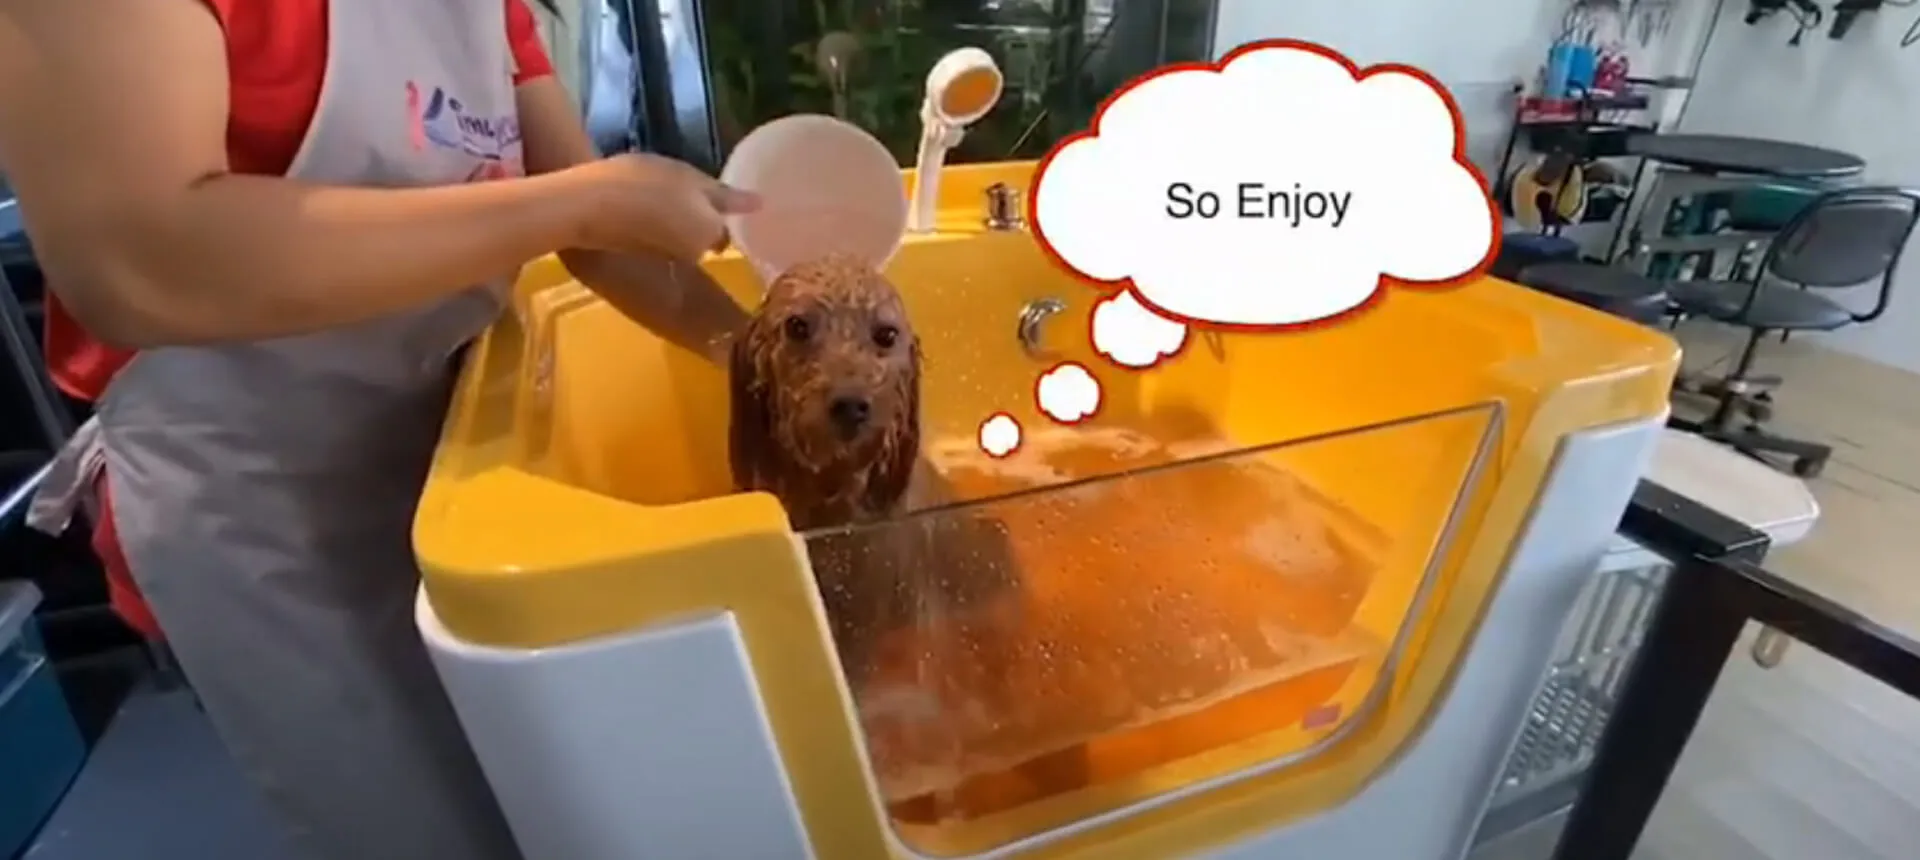 Veterinary Bathtub Display Video